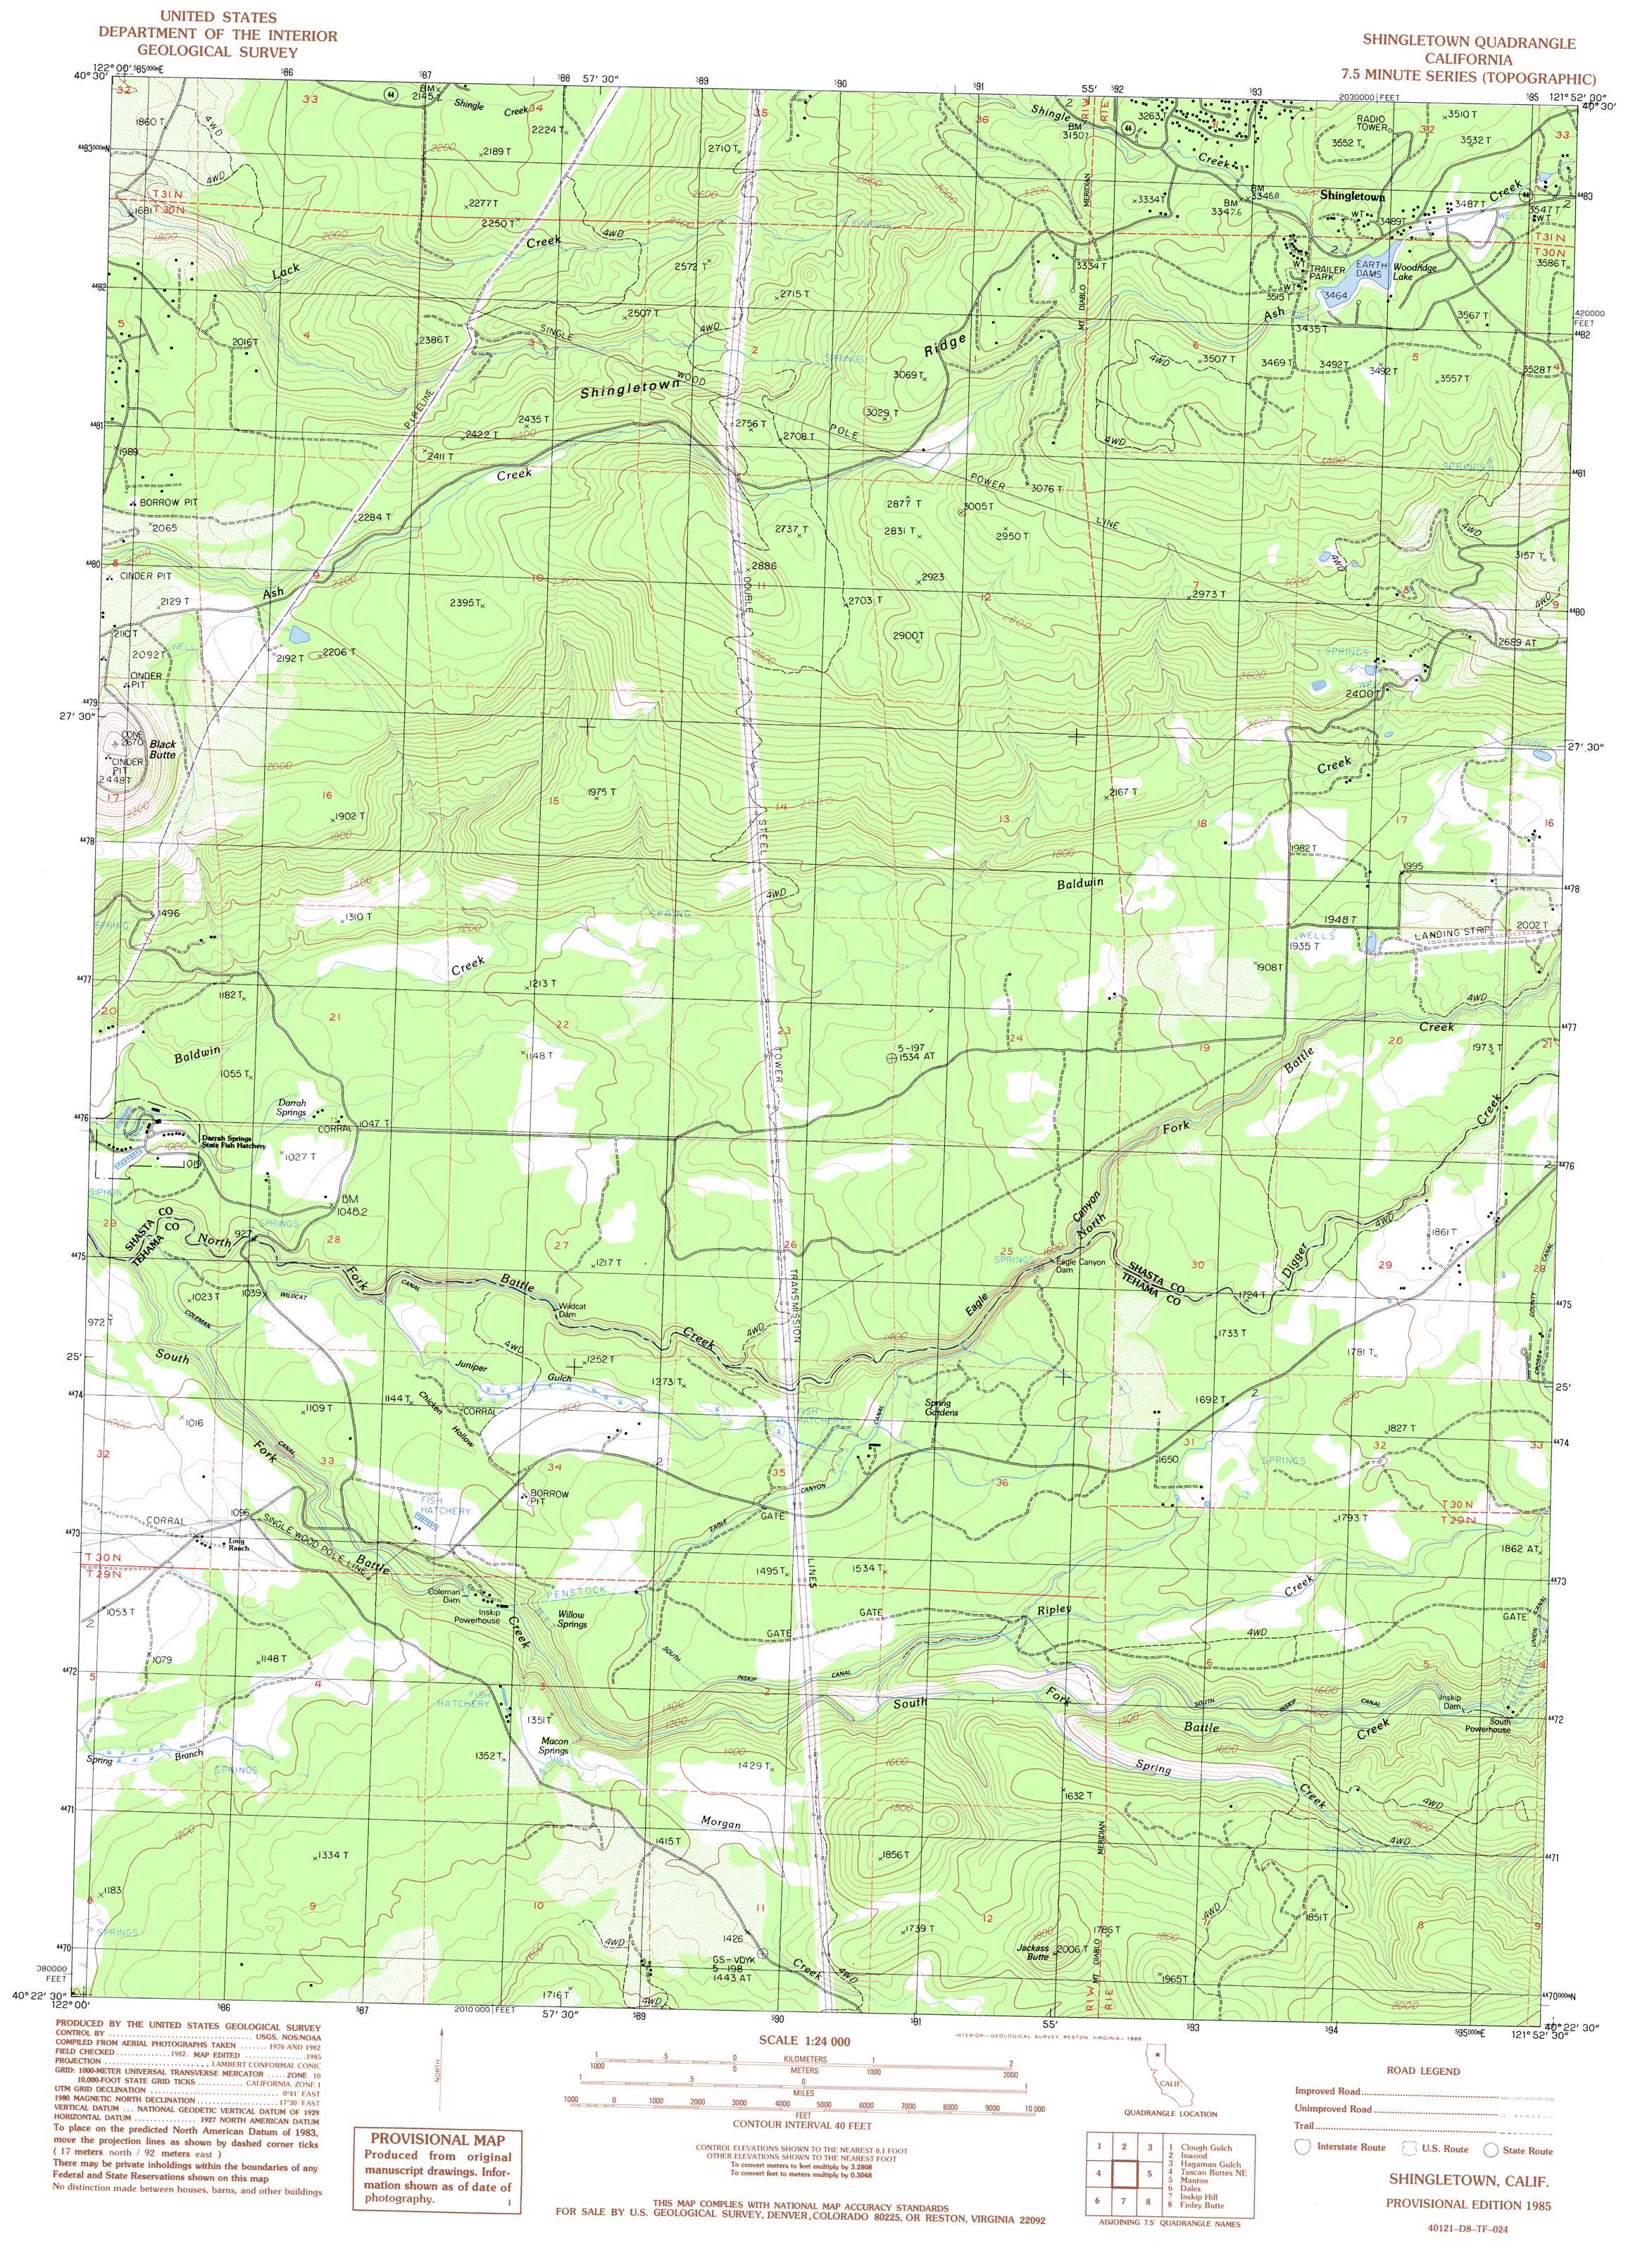 Shingletown topographic map, CA - USGS Topo Quad 40121d8